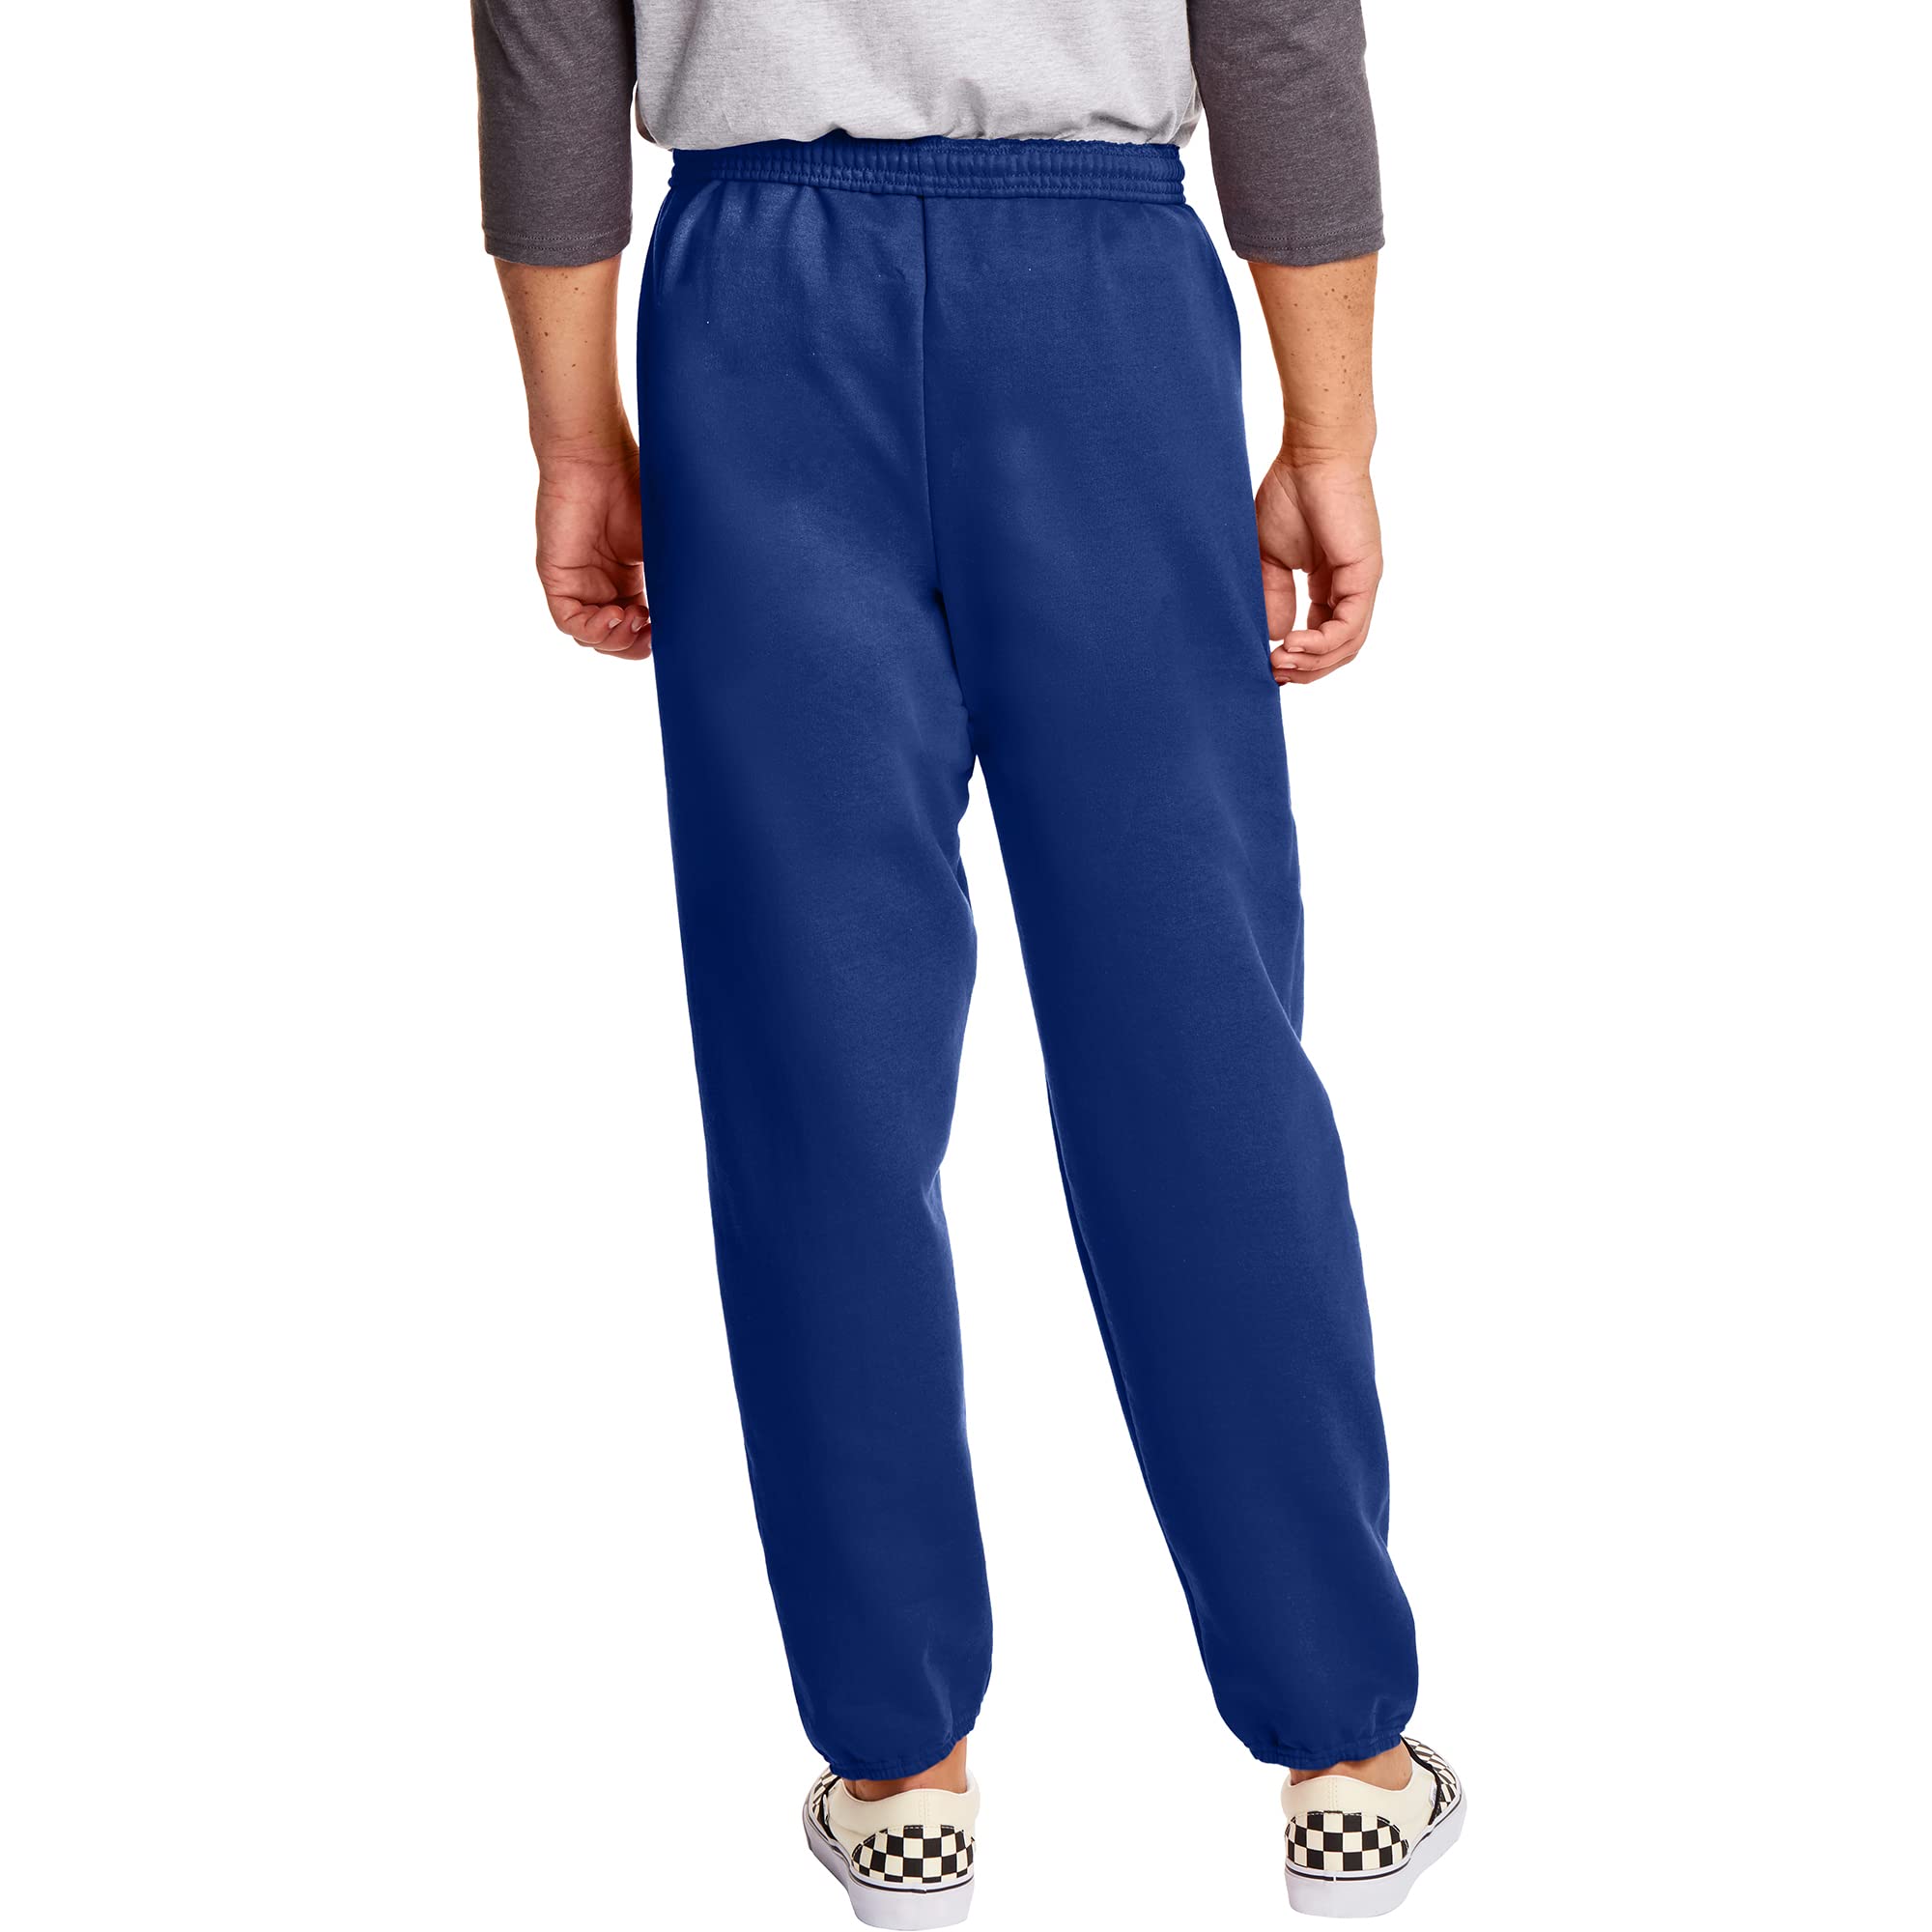 Hanes Men's EcoSmart Non-Pocket Sweatpant, Deep Royal, Medium